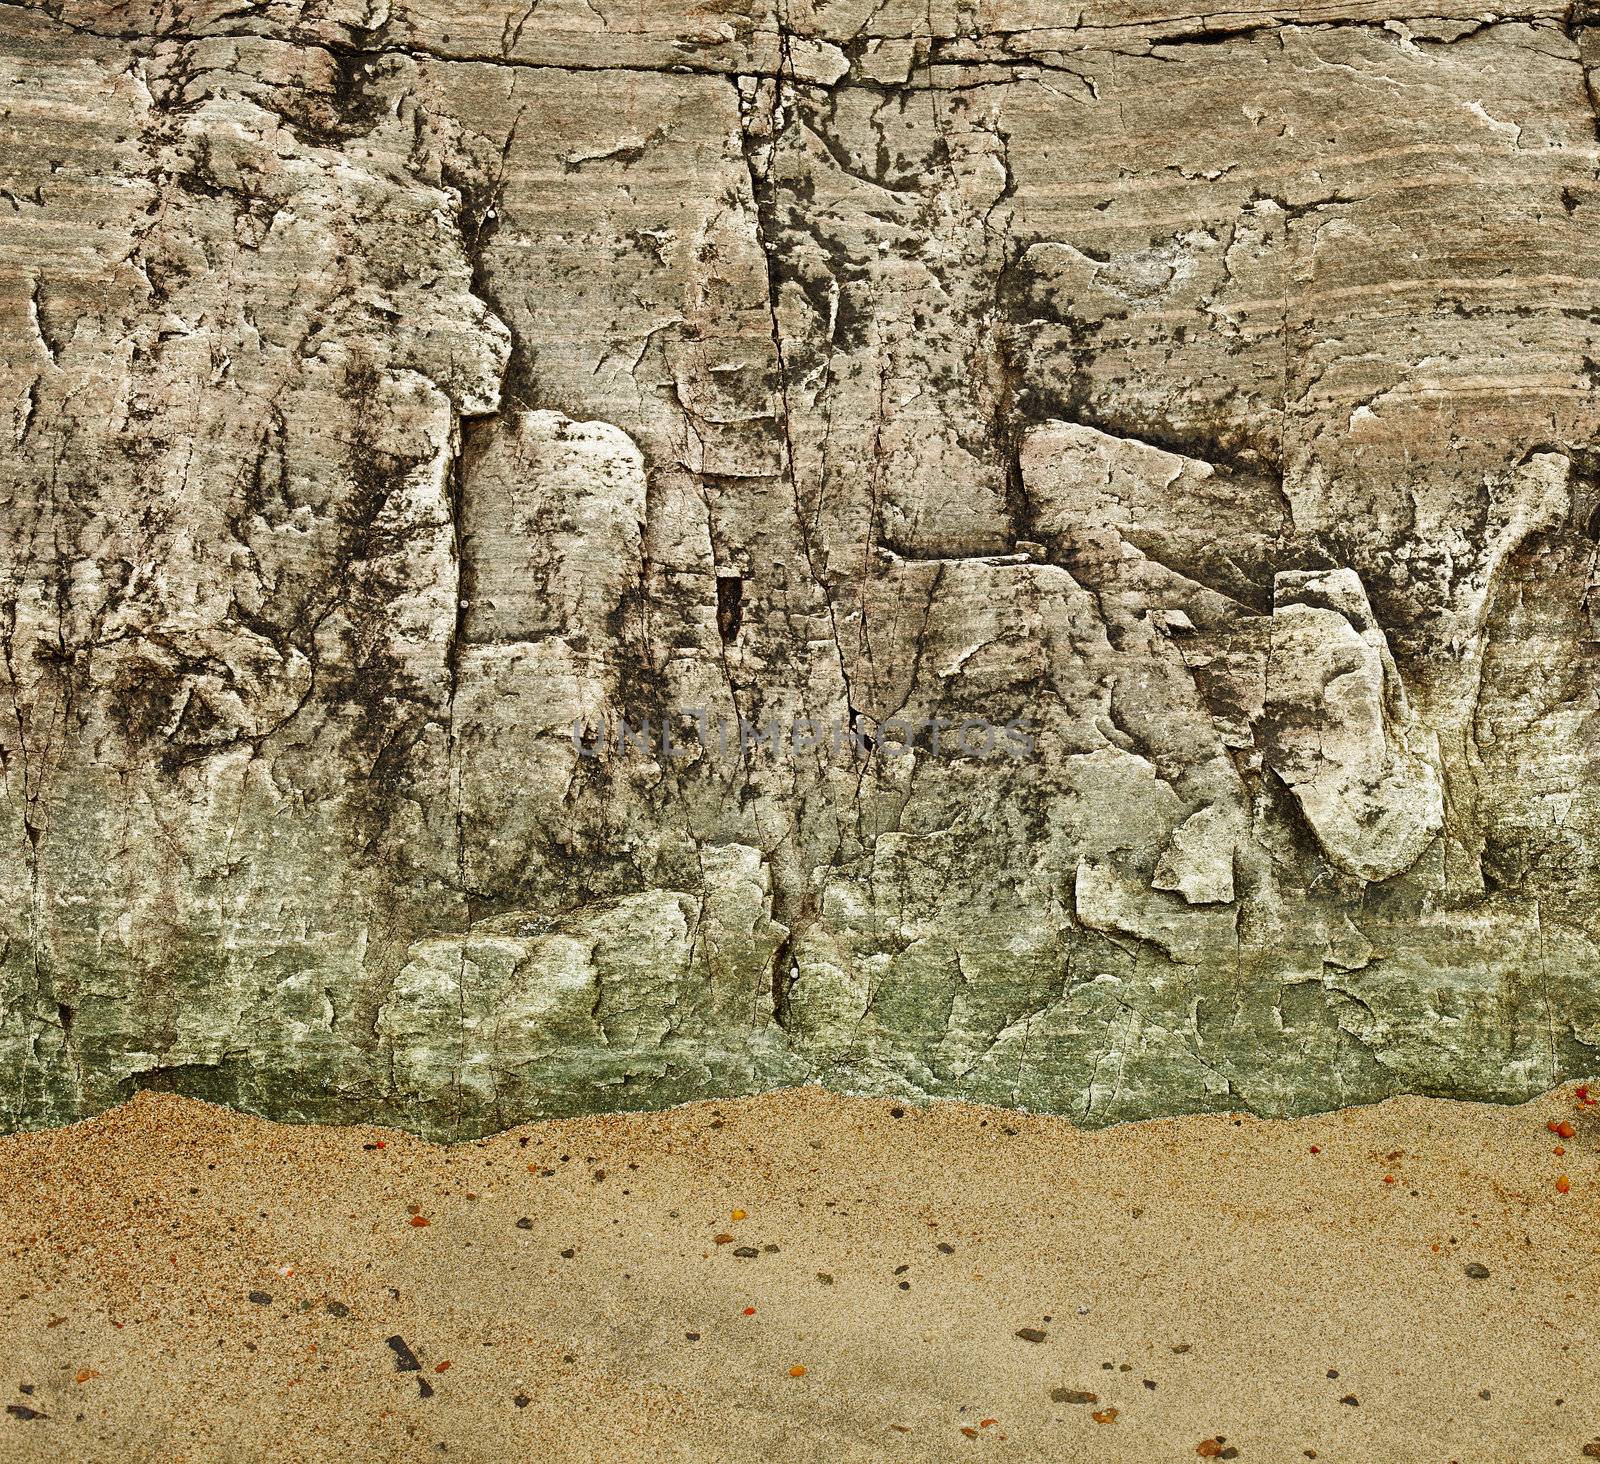 The granite rock on a sandy beach - background